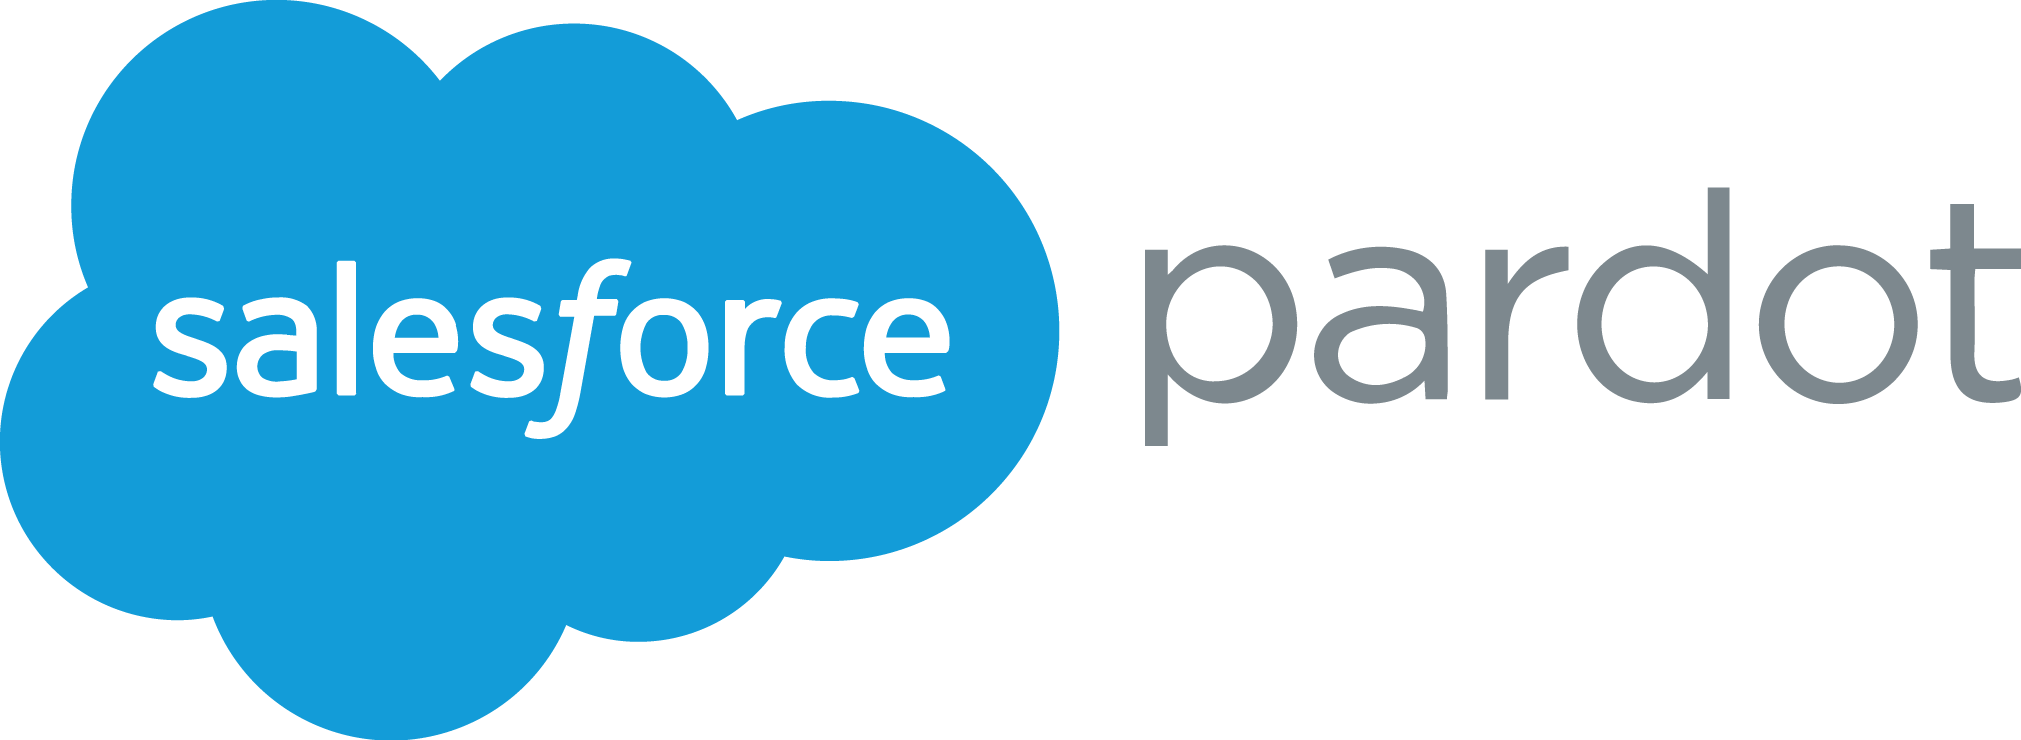 Salesforce Pardot Logo png